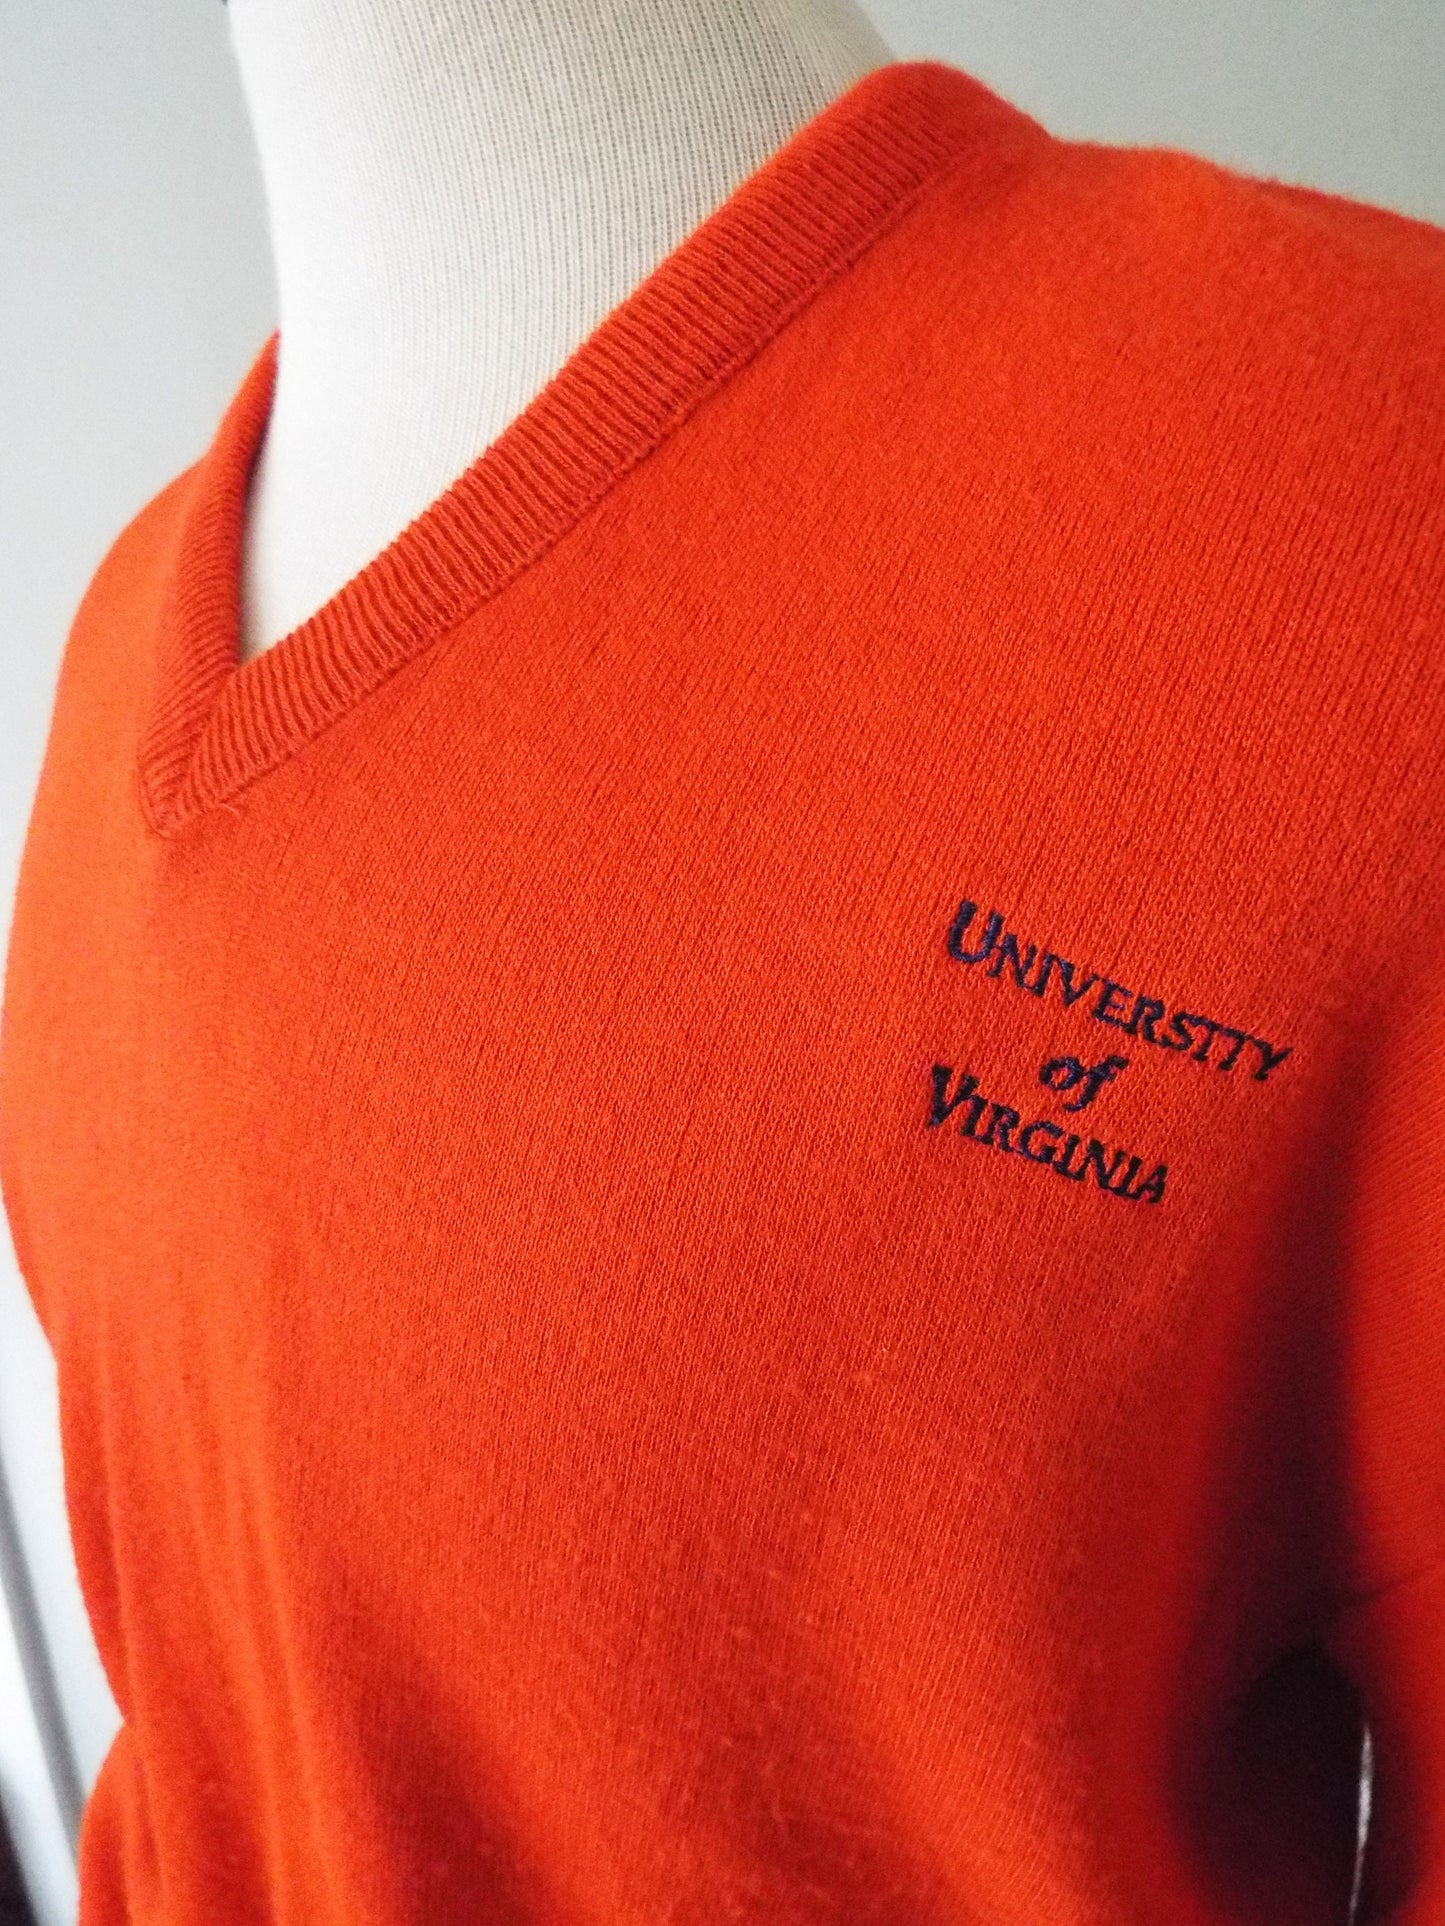 Vintage University of Virgina Long Sleeve Vee Neck Sweater by McBriar